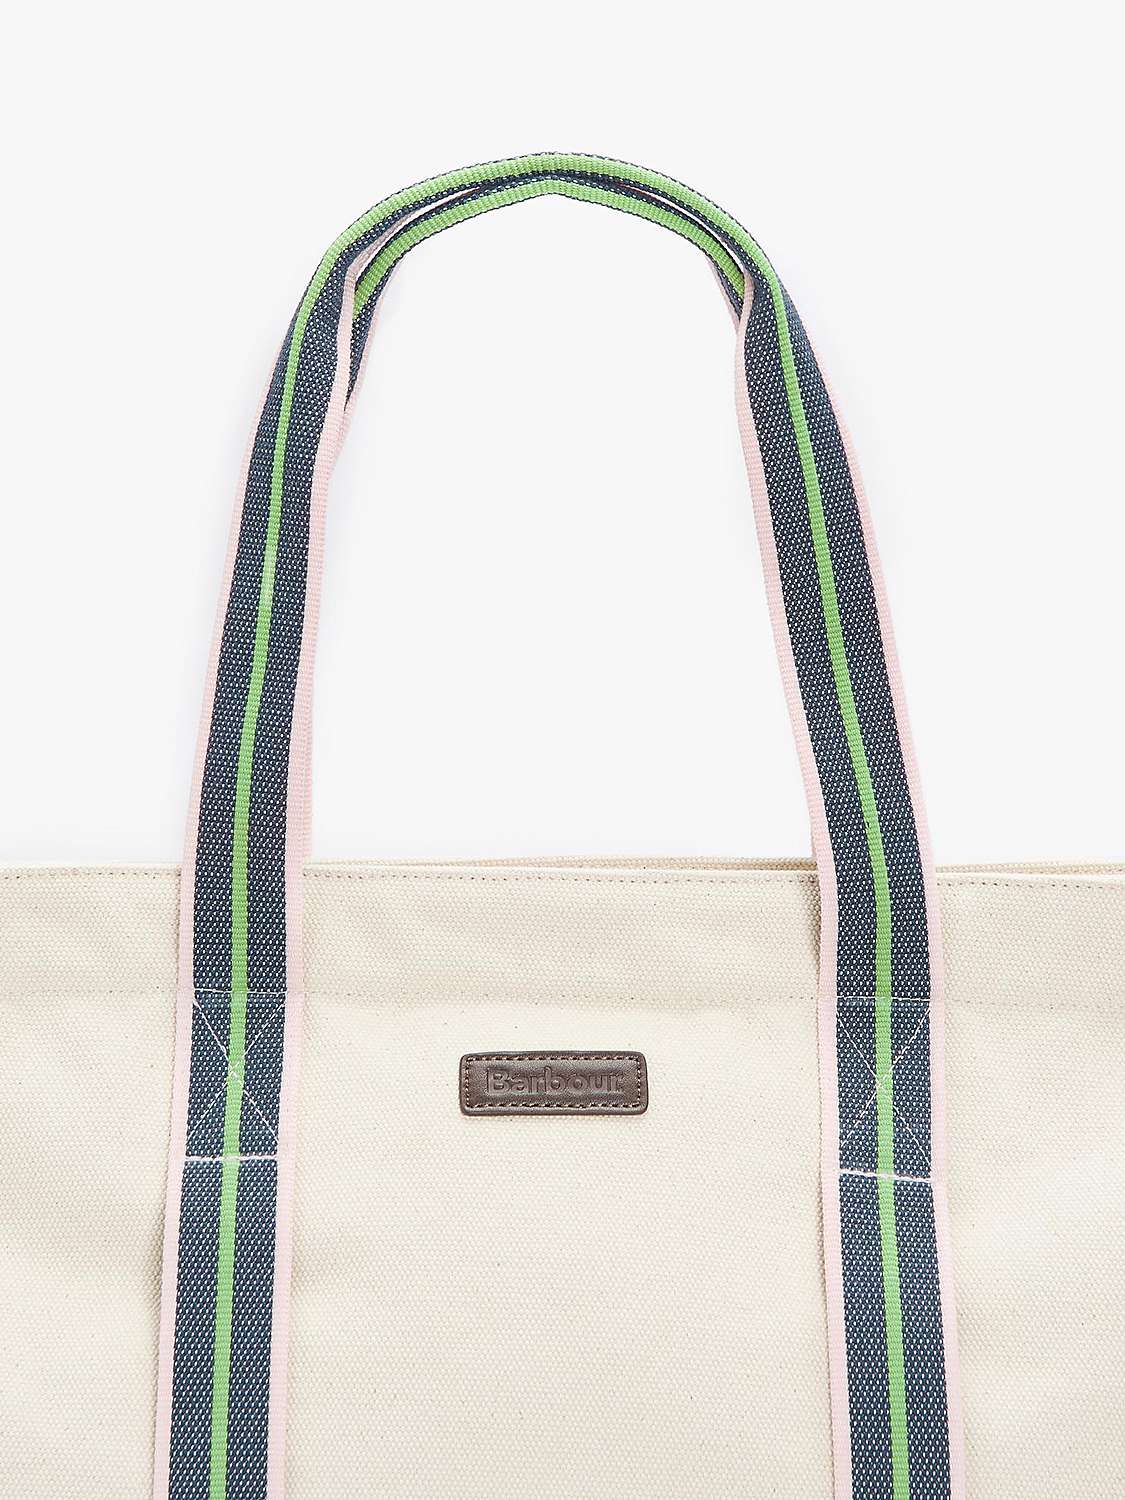 Buy Barbour Madison Cotton Canvas Tote Bag, Beige Online at johnlewis.com